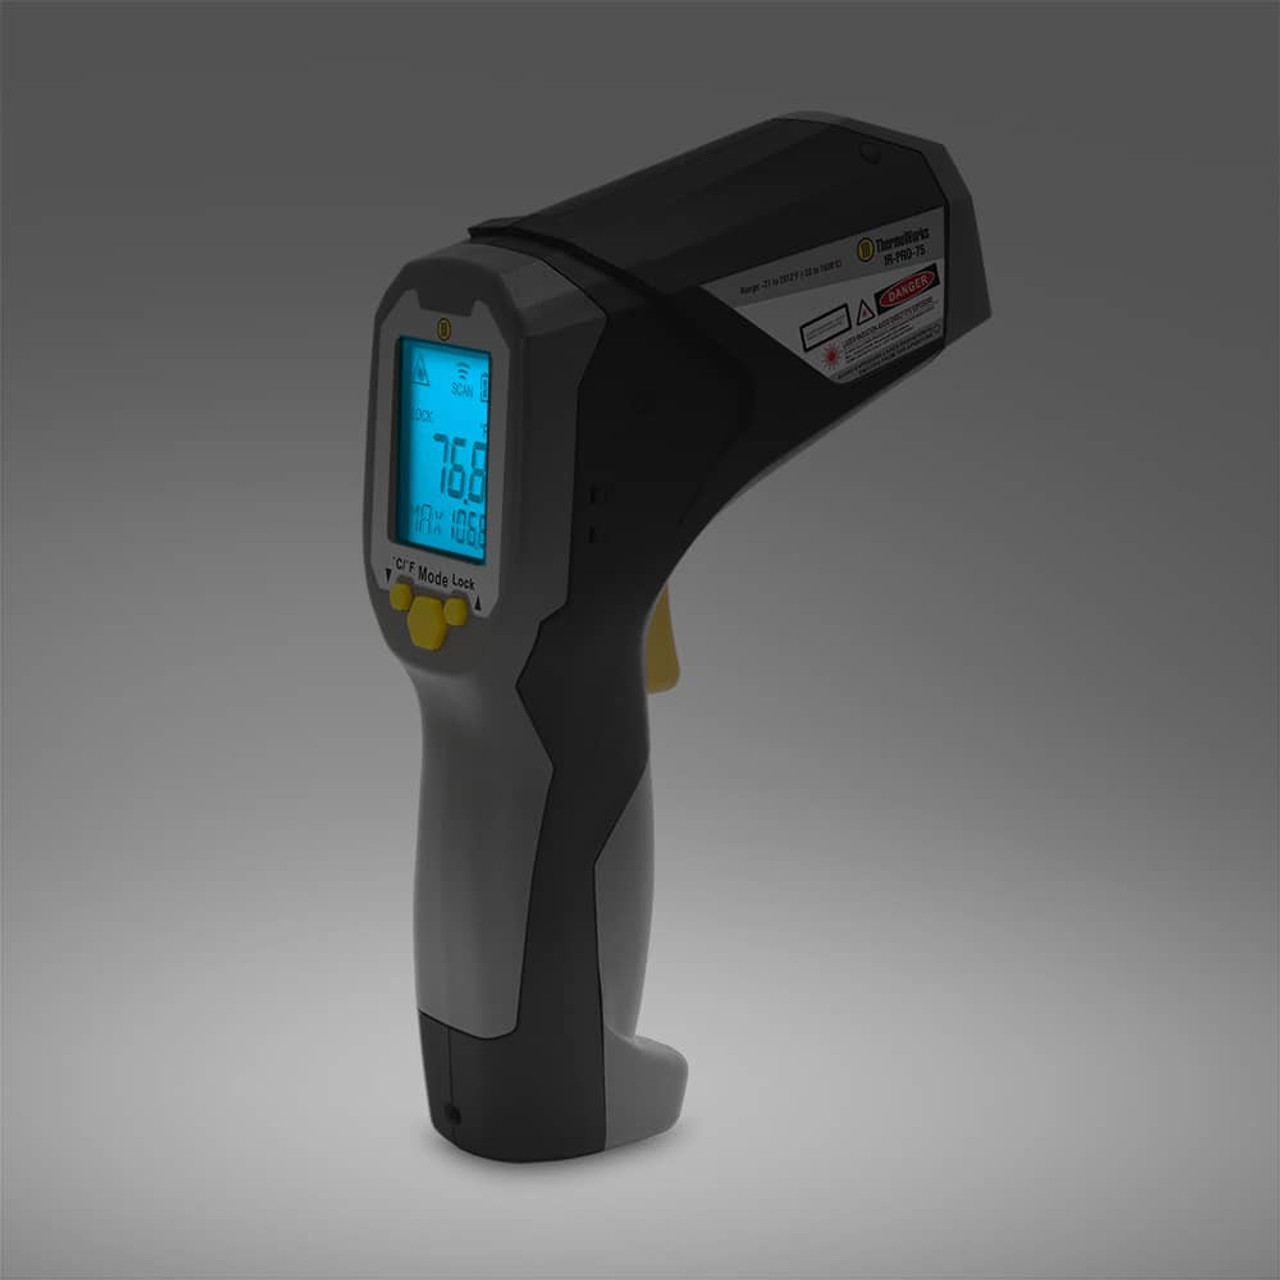 Dual Laser Infrared Temperature Gun by ThermoPro at Fleet Farm